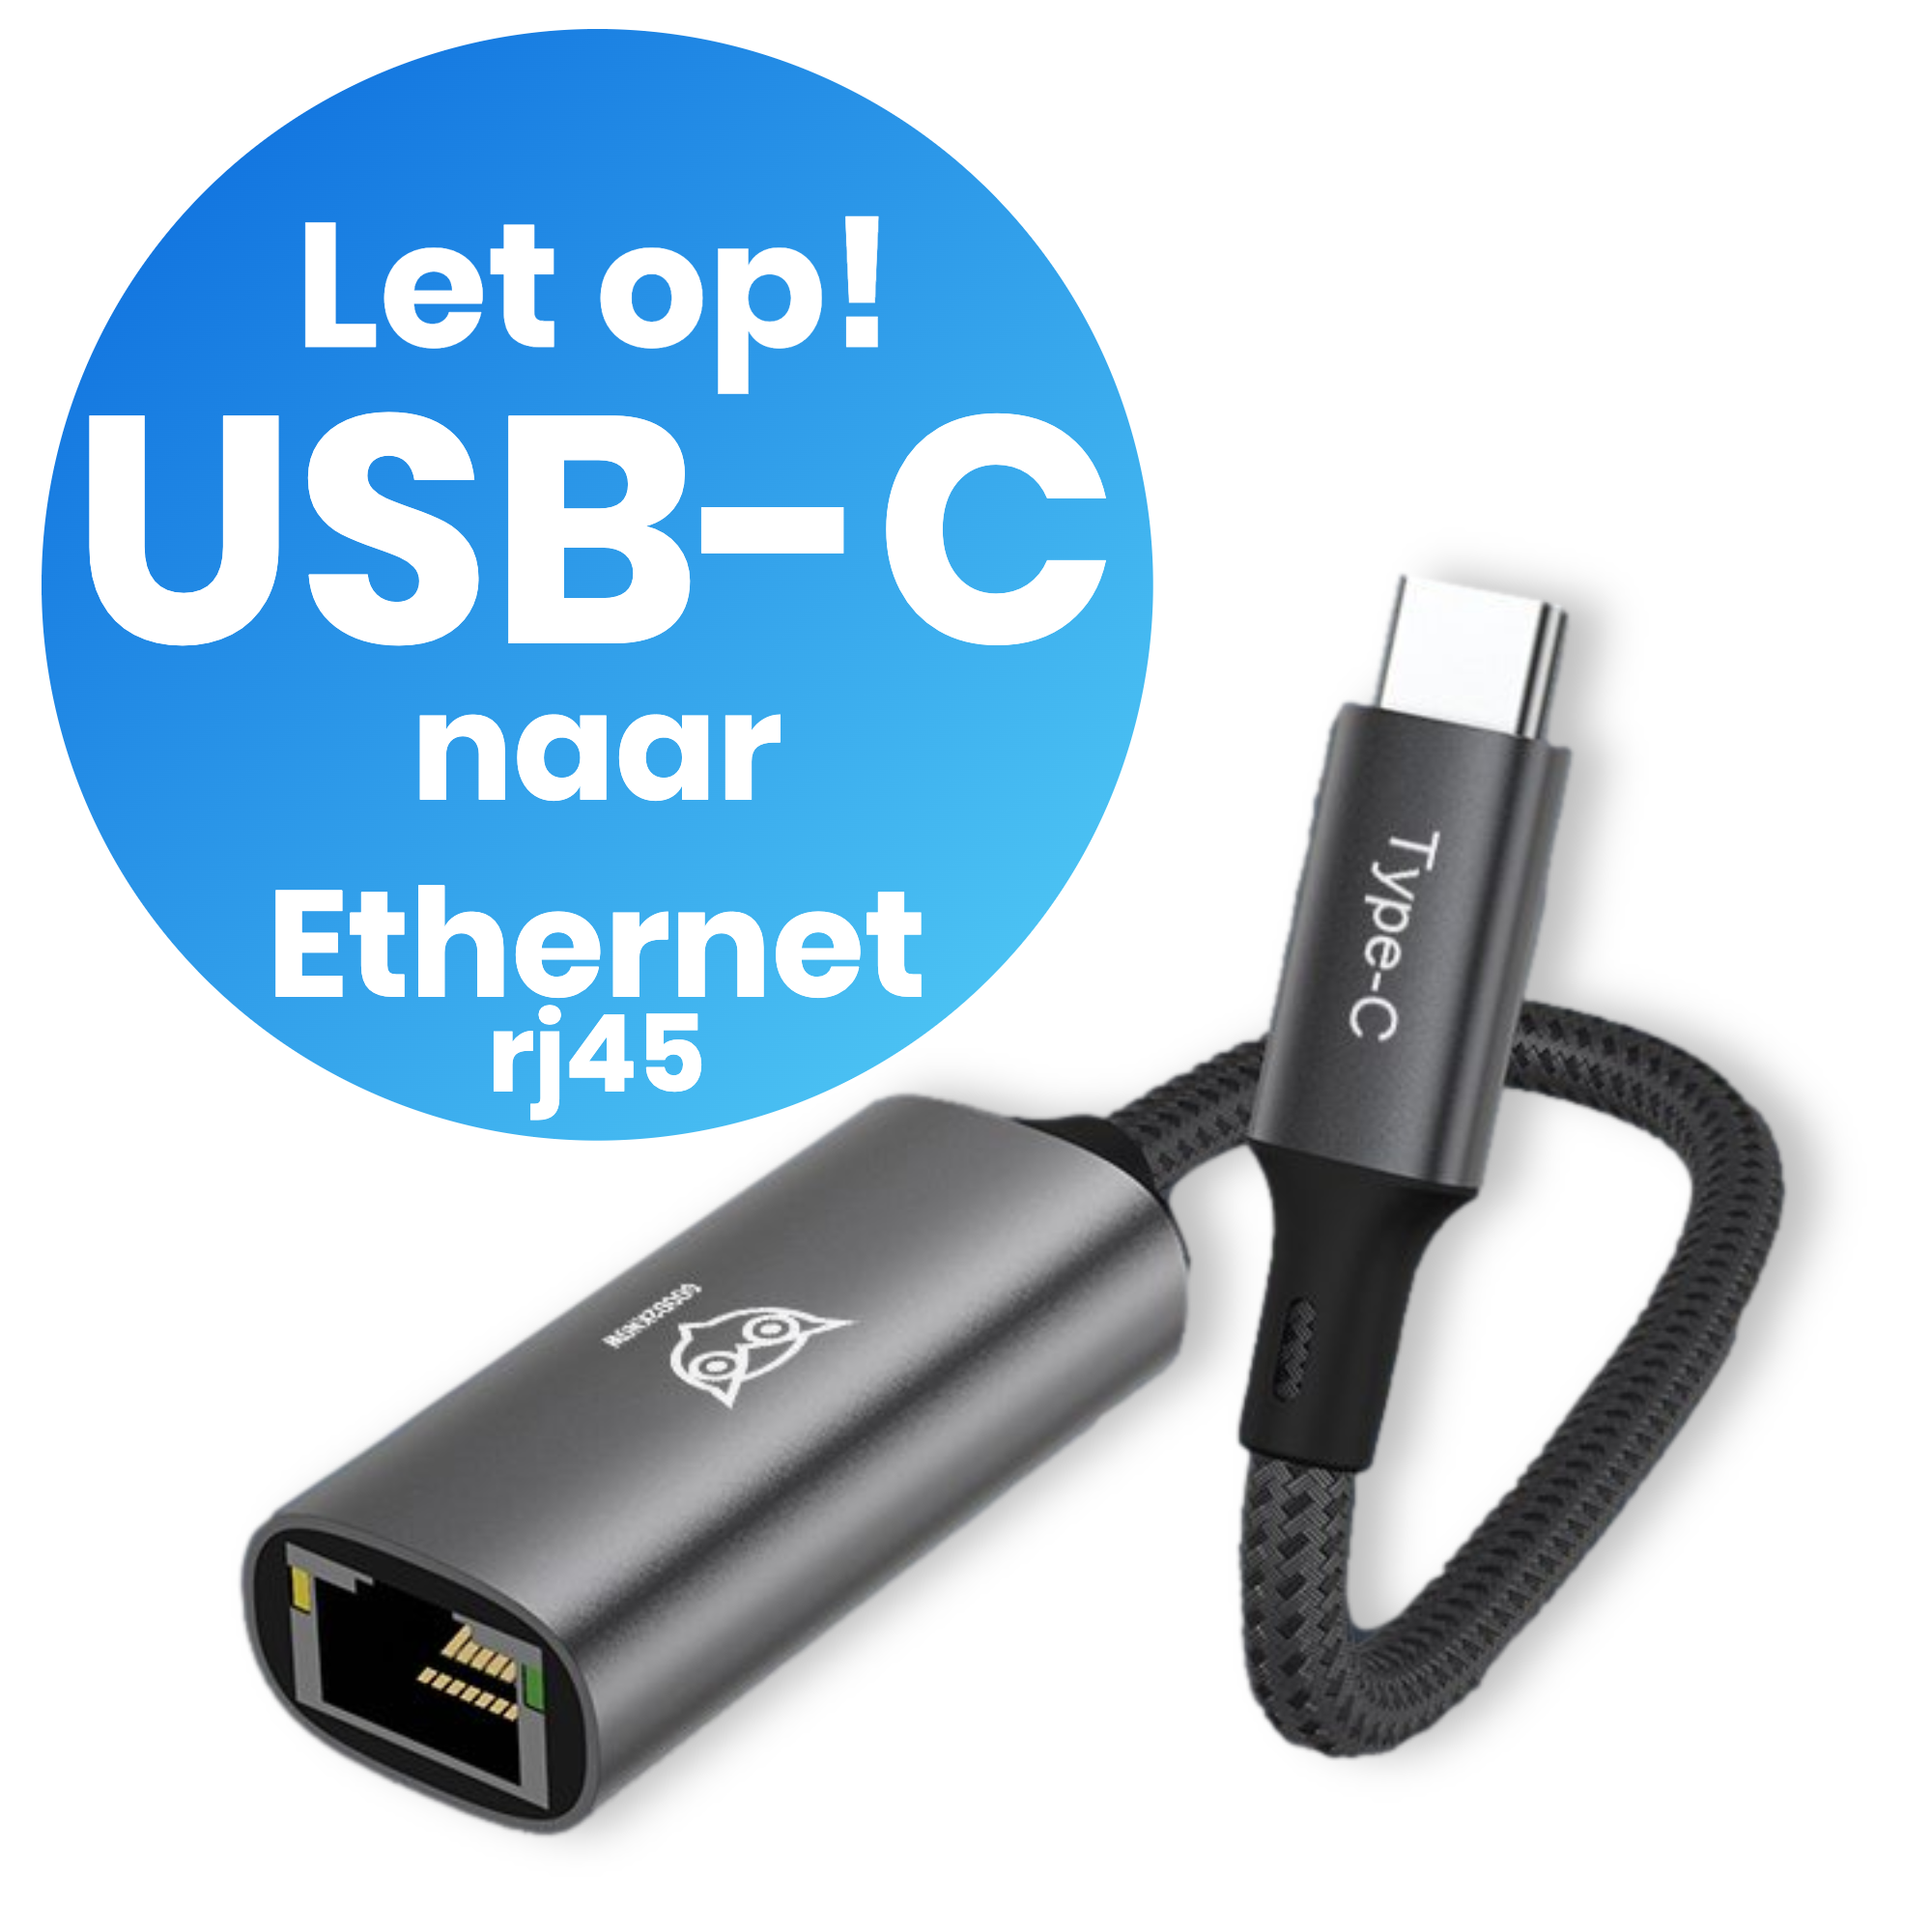 Ethernet adapter USB-C Rj45 USB C naar Internet Adapter 20CM